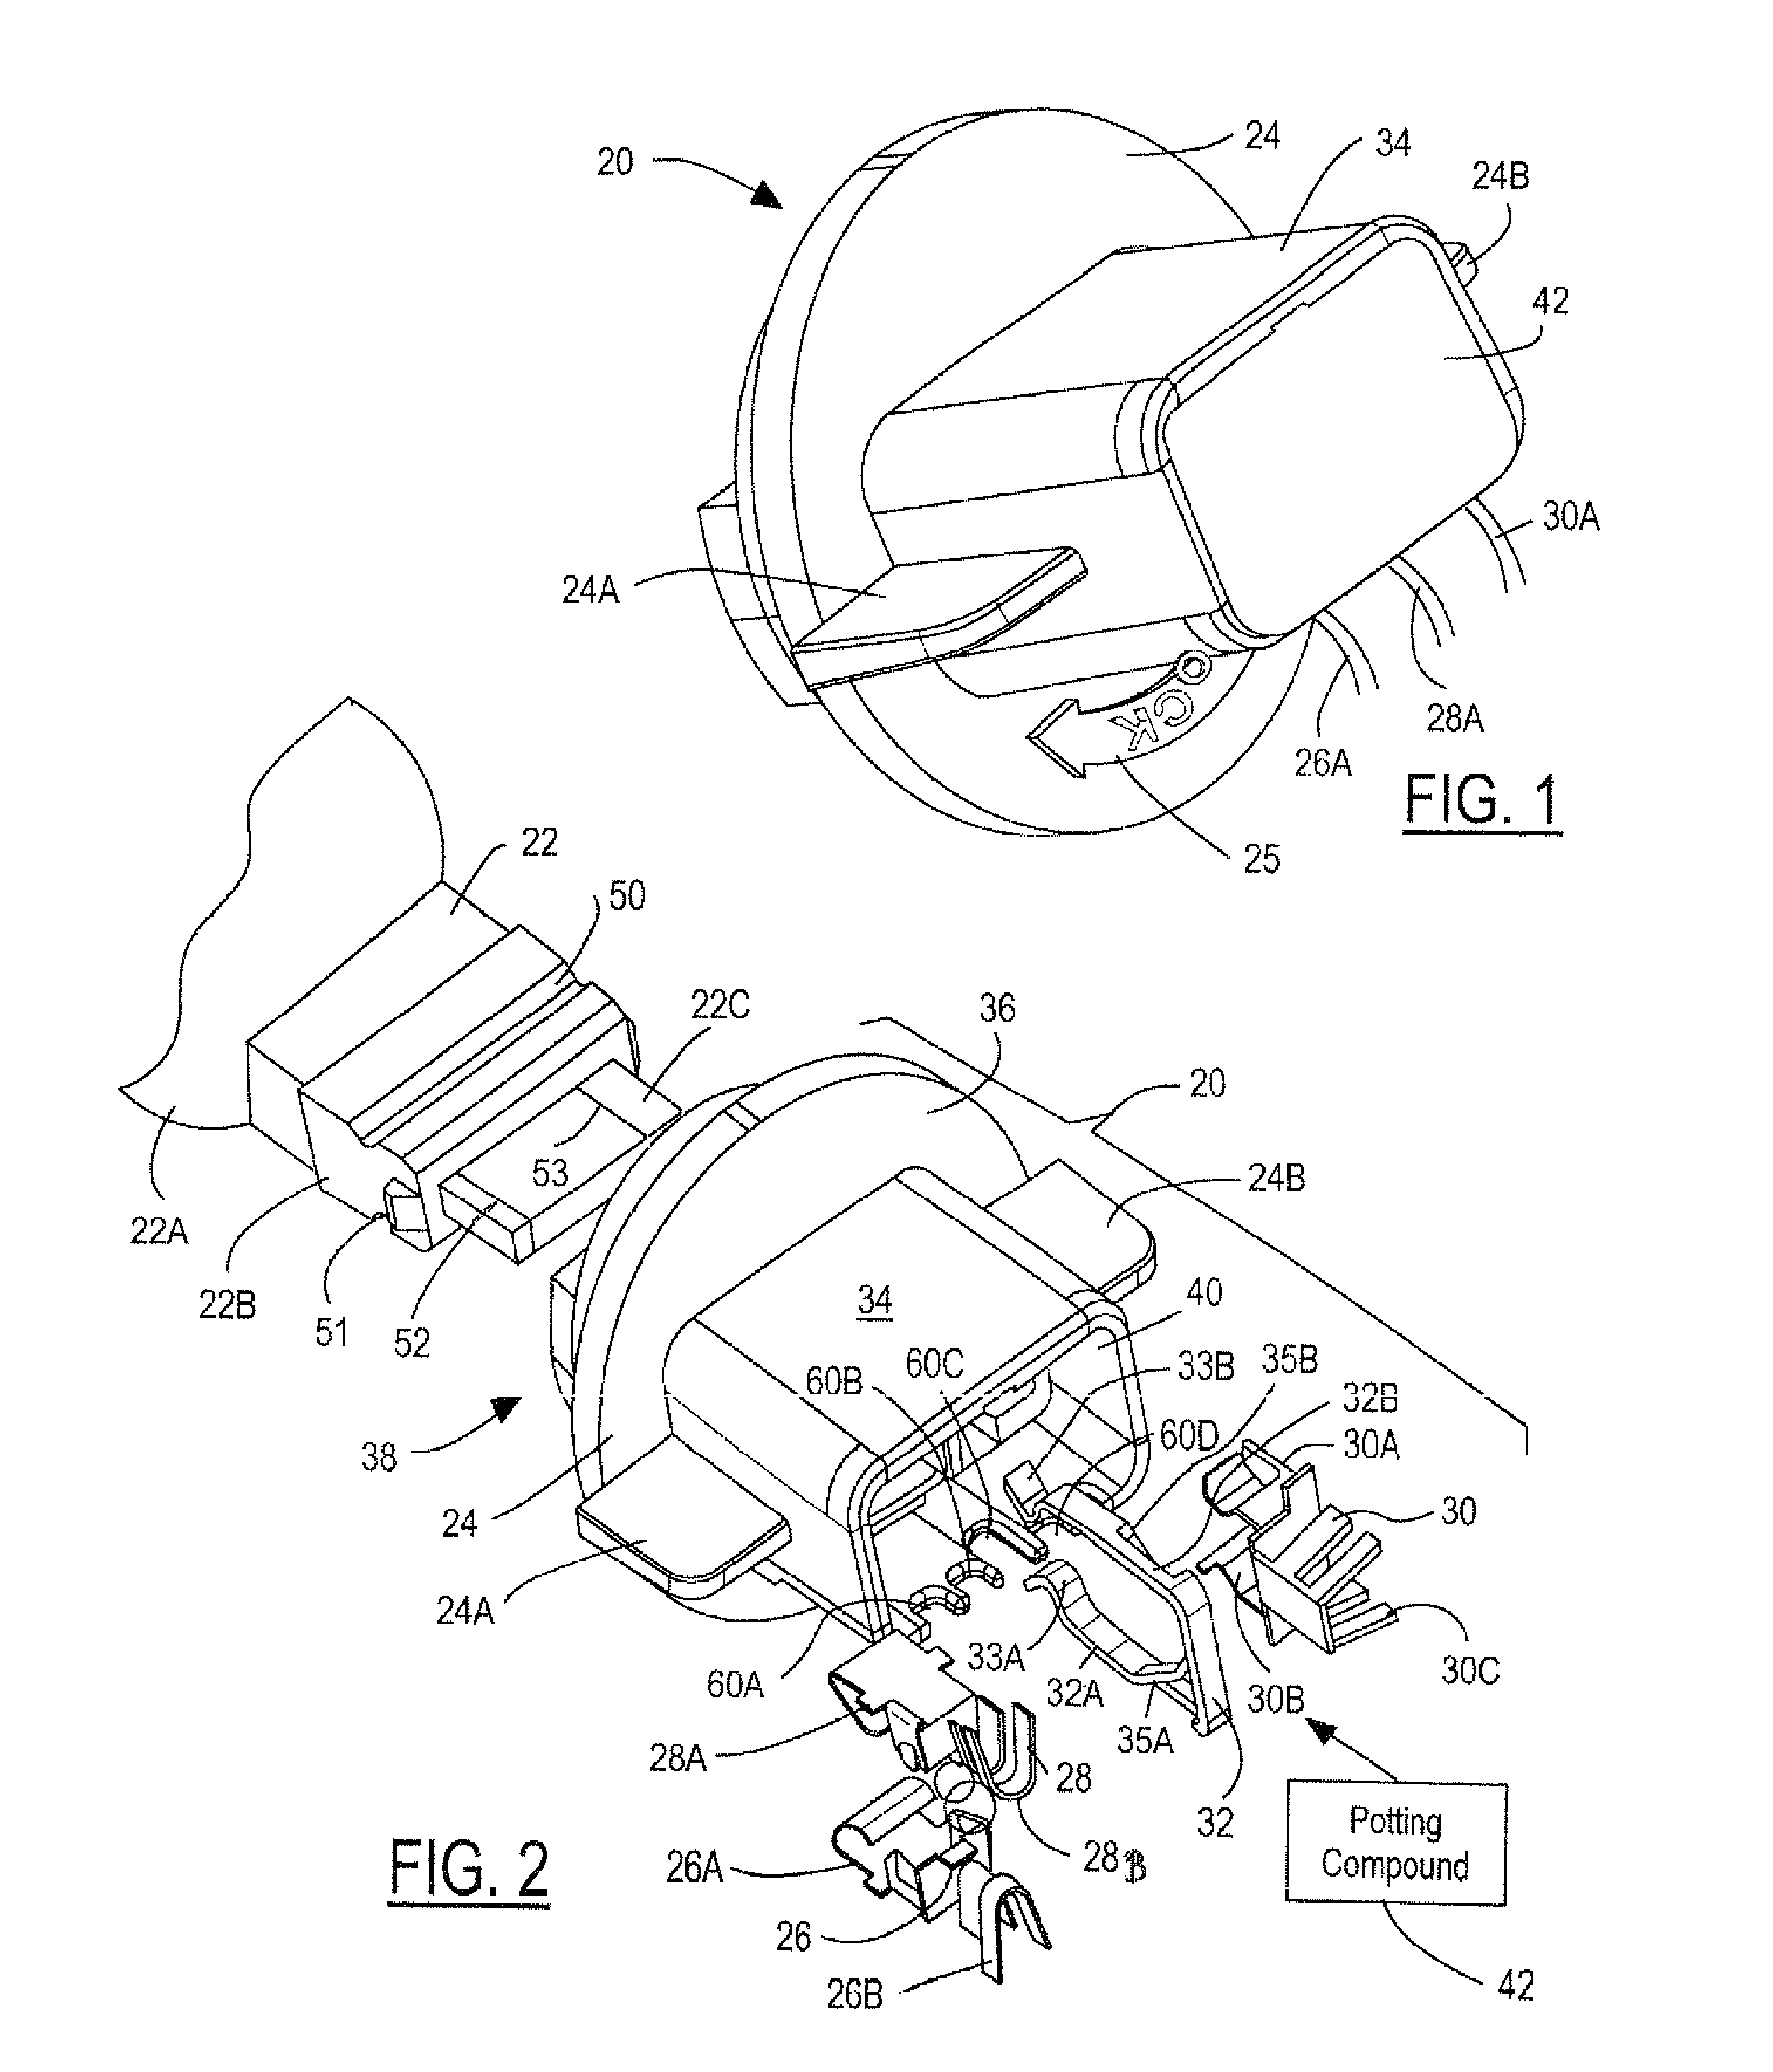 Lamp socket assemblies with axial terminals